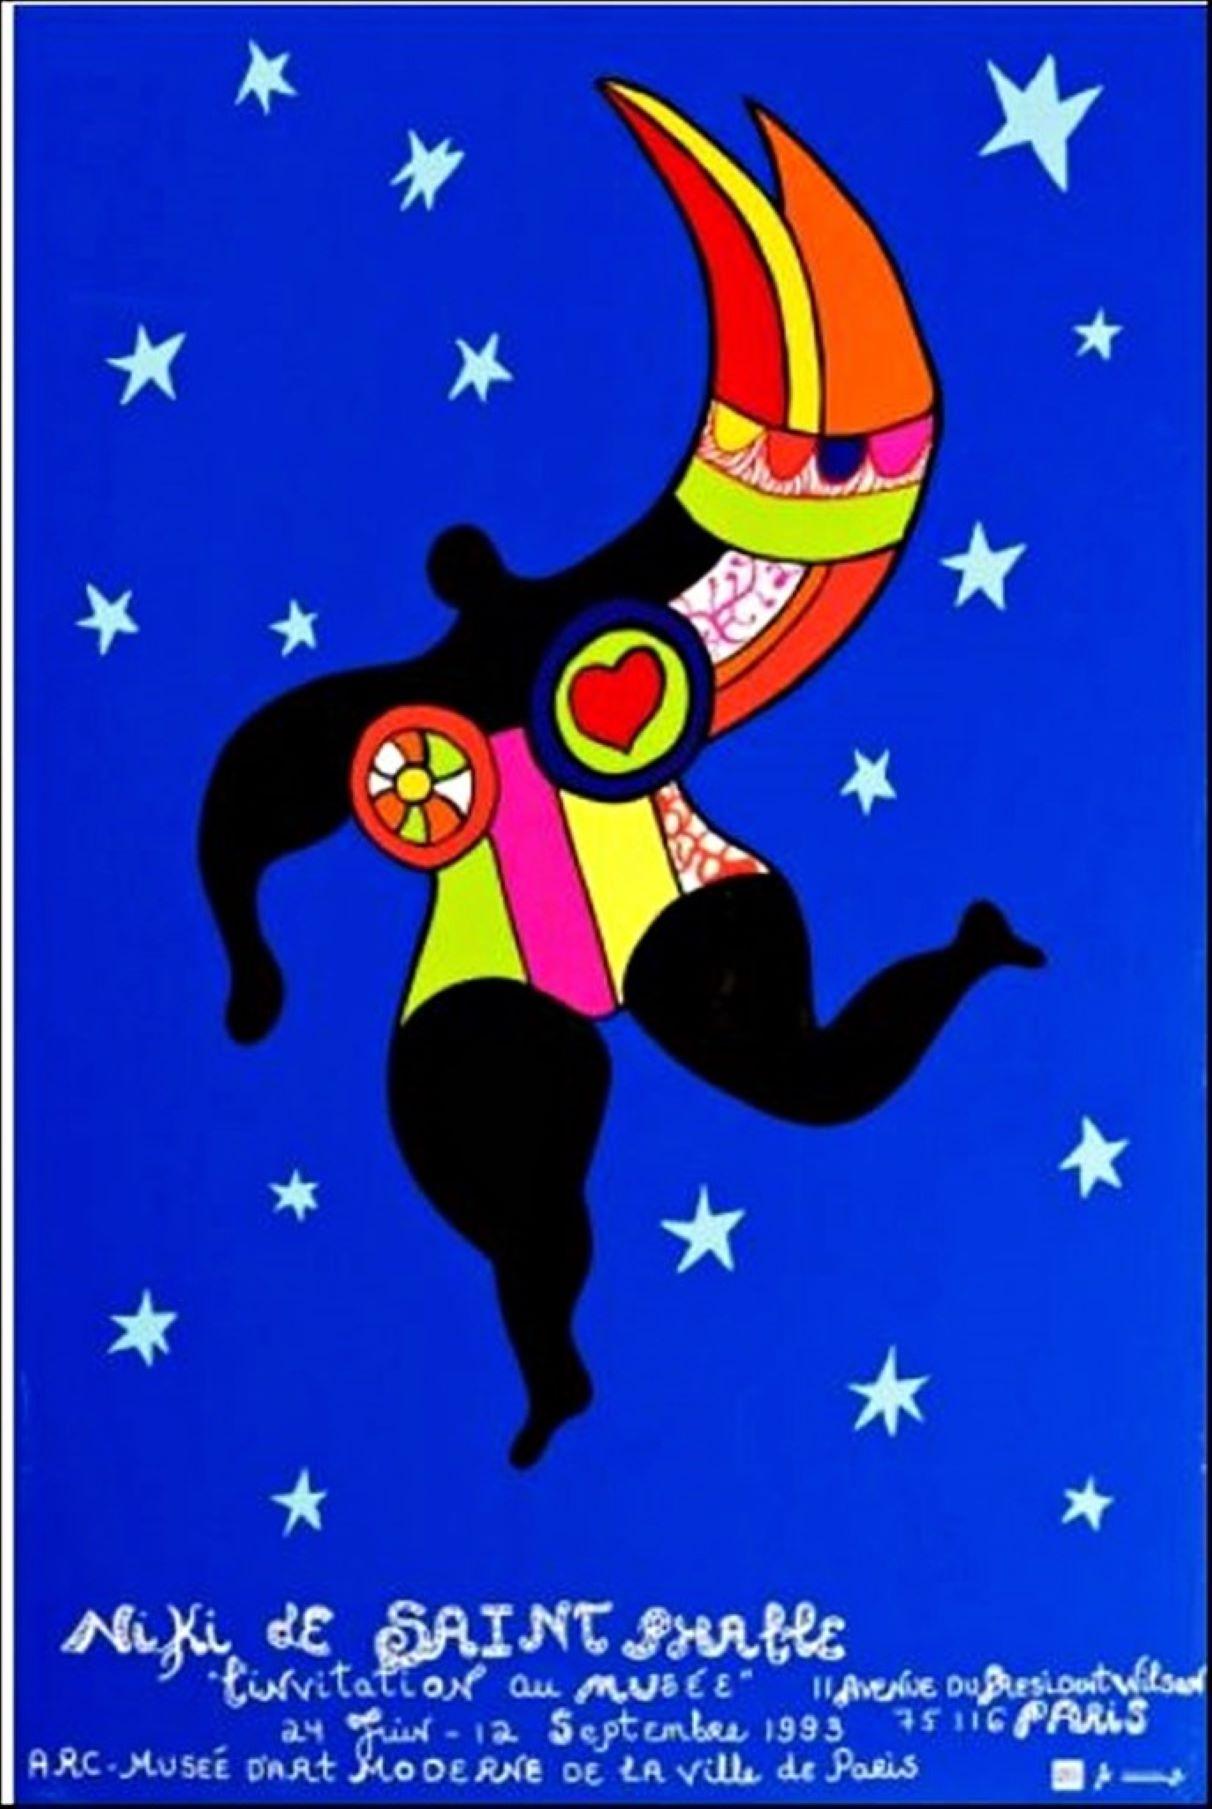 Niki de Saint Phalle Figurative Print - Invitation au Musee, original museum poster